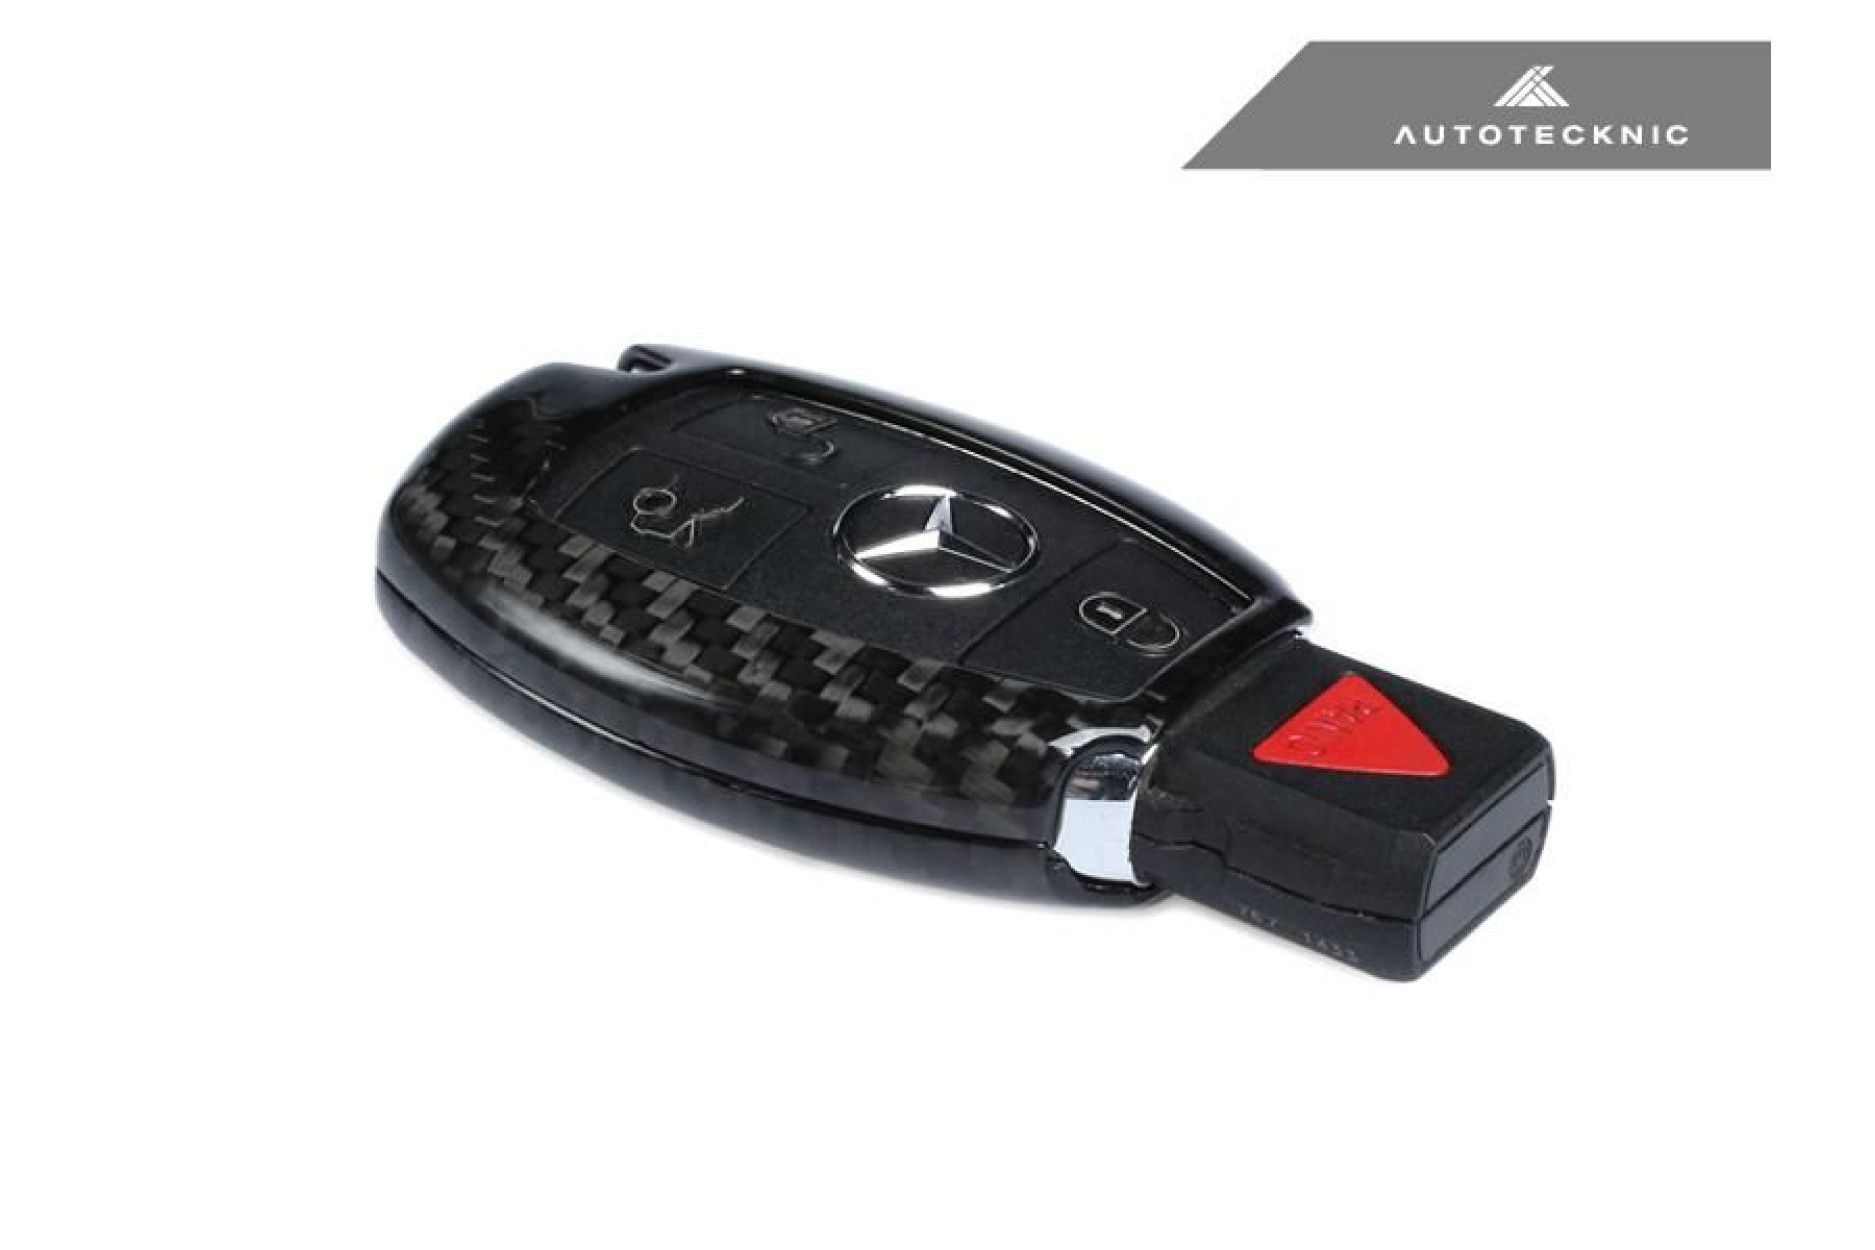 Echt Carbon Auto Schlüssel Cover für Mercedes E S Klasse schwarz, 49,90 €